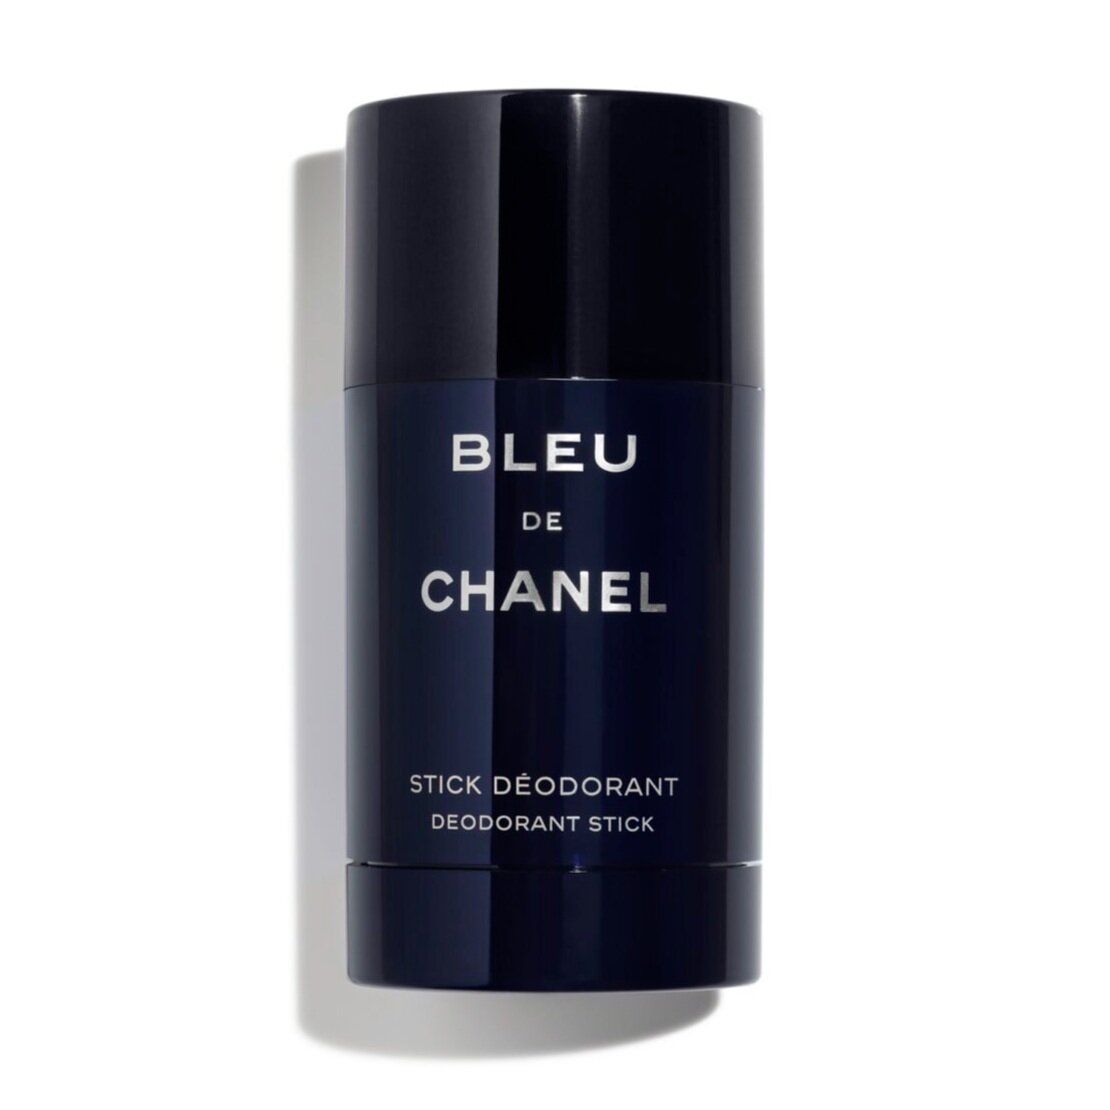 bleu-de-chanel-deodorant-stick-2oz--packshot-default-107710-8823573905438.jpg